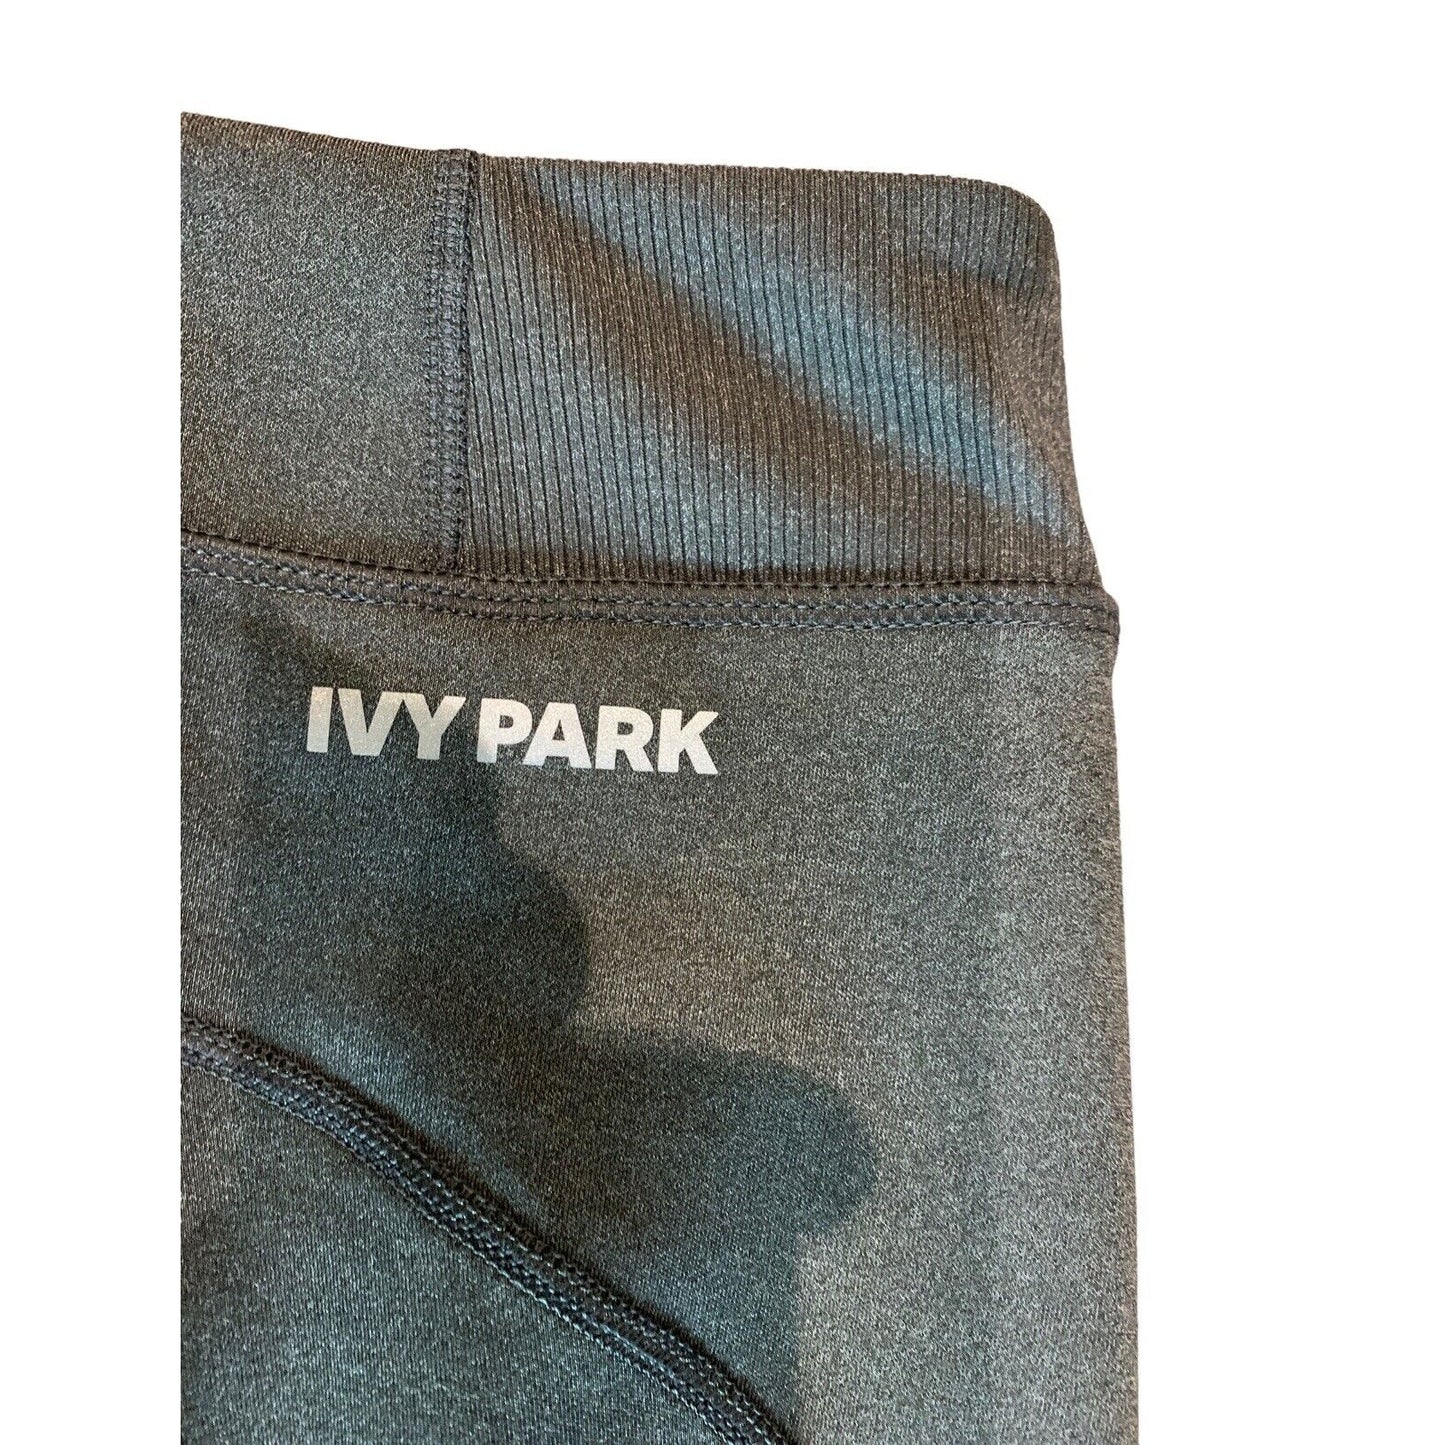 Ivy Park High Rise Sculpted Active Legging